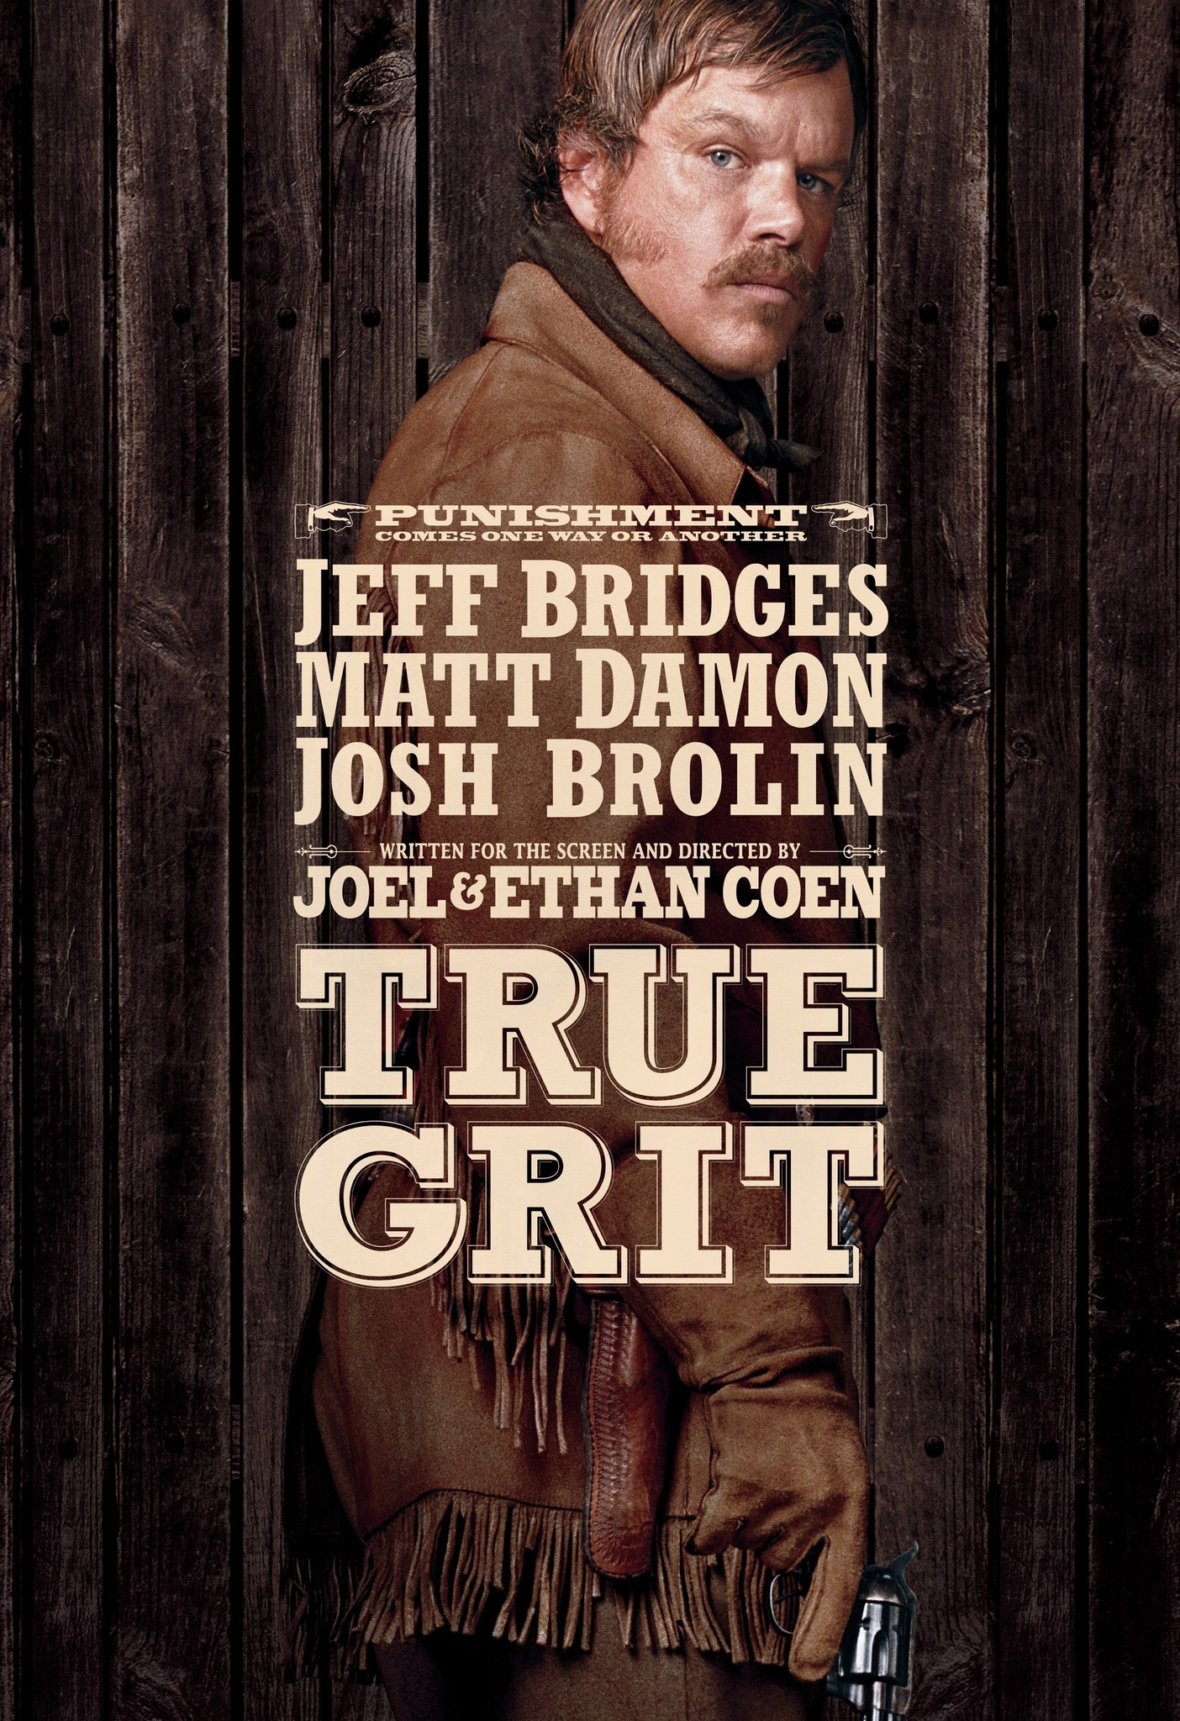 Best Josh Brolin Movies: True Grit